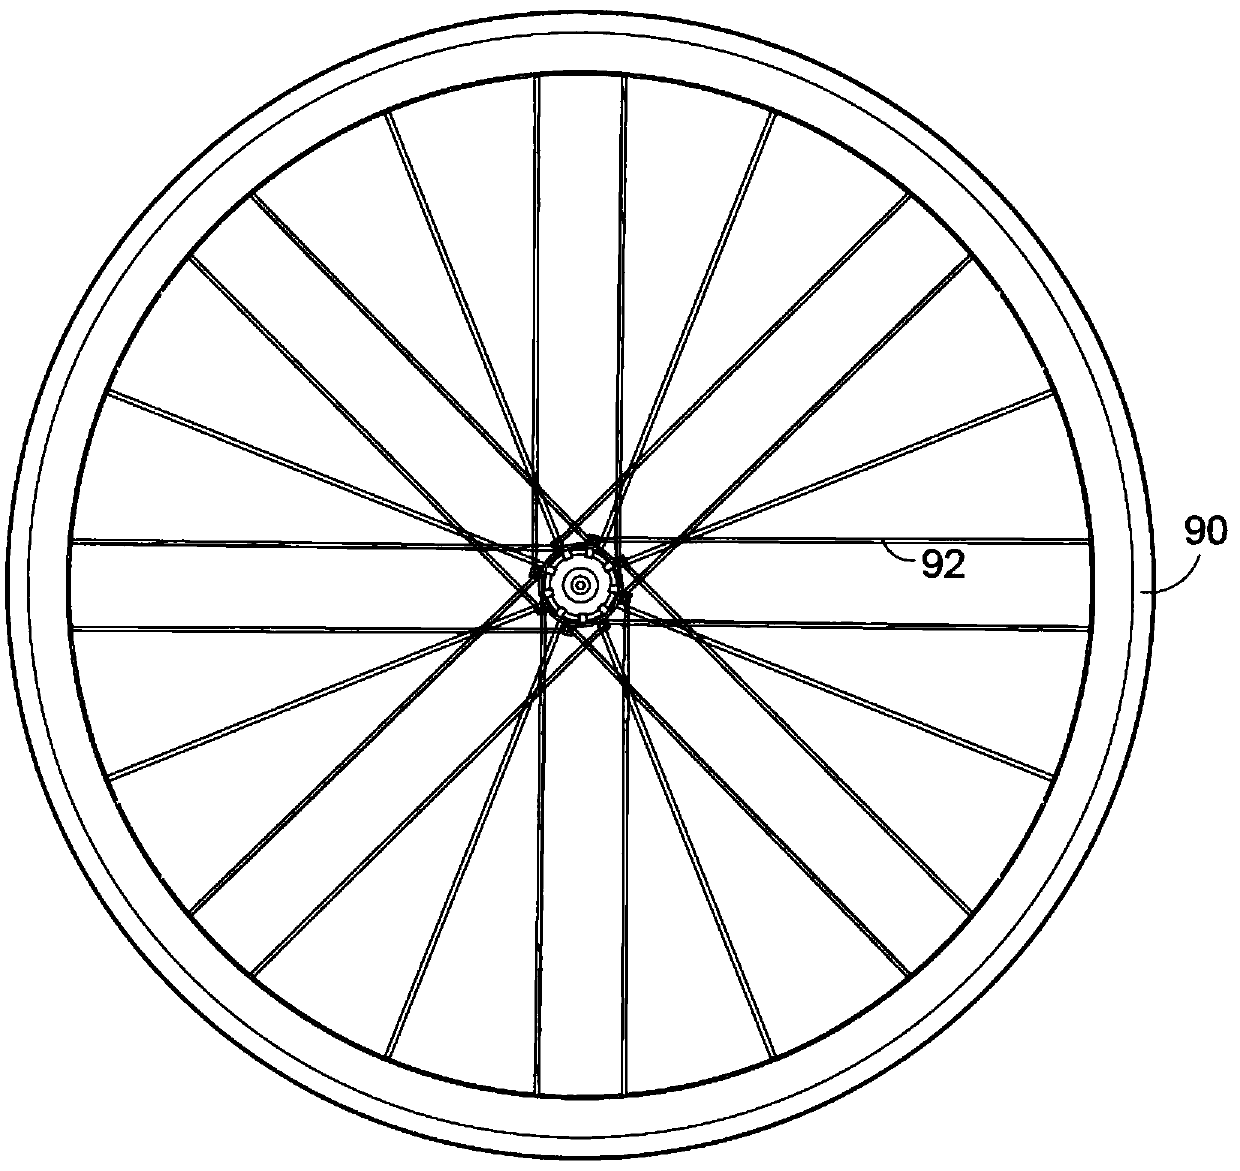 Bicycle wheel group